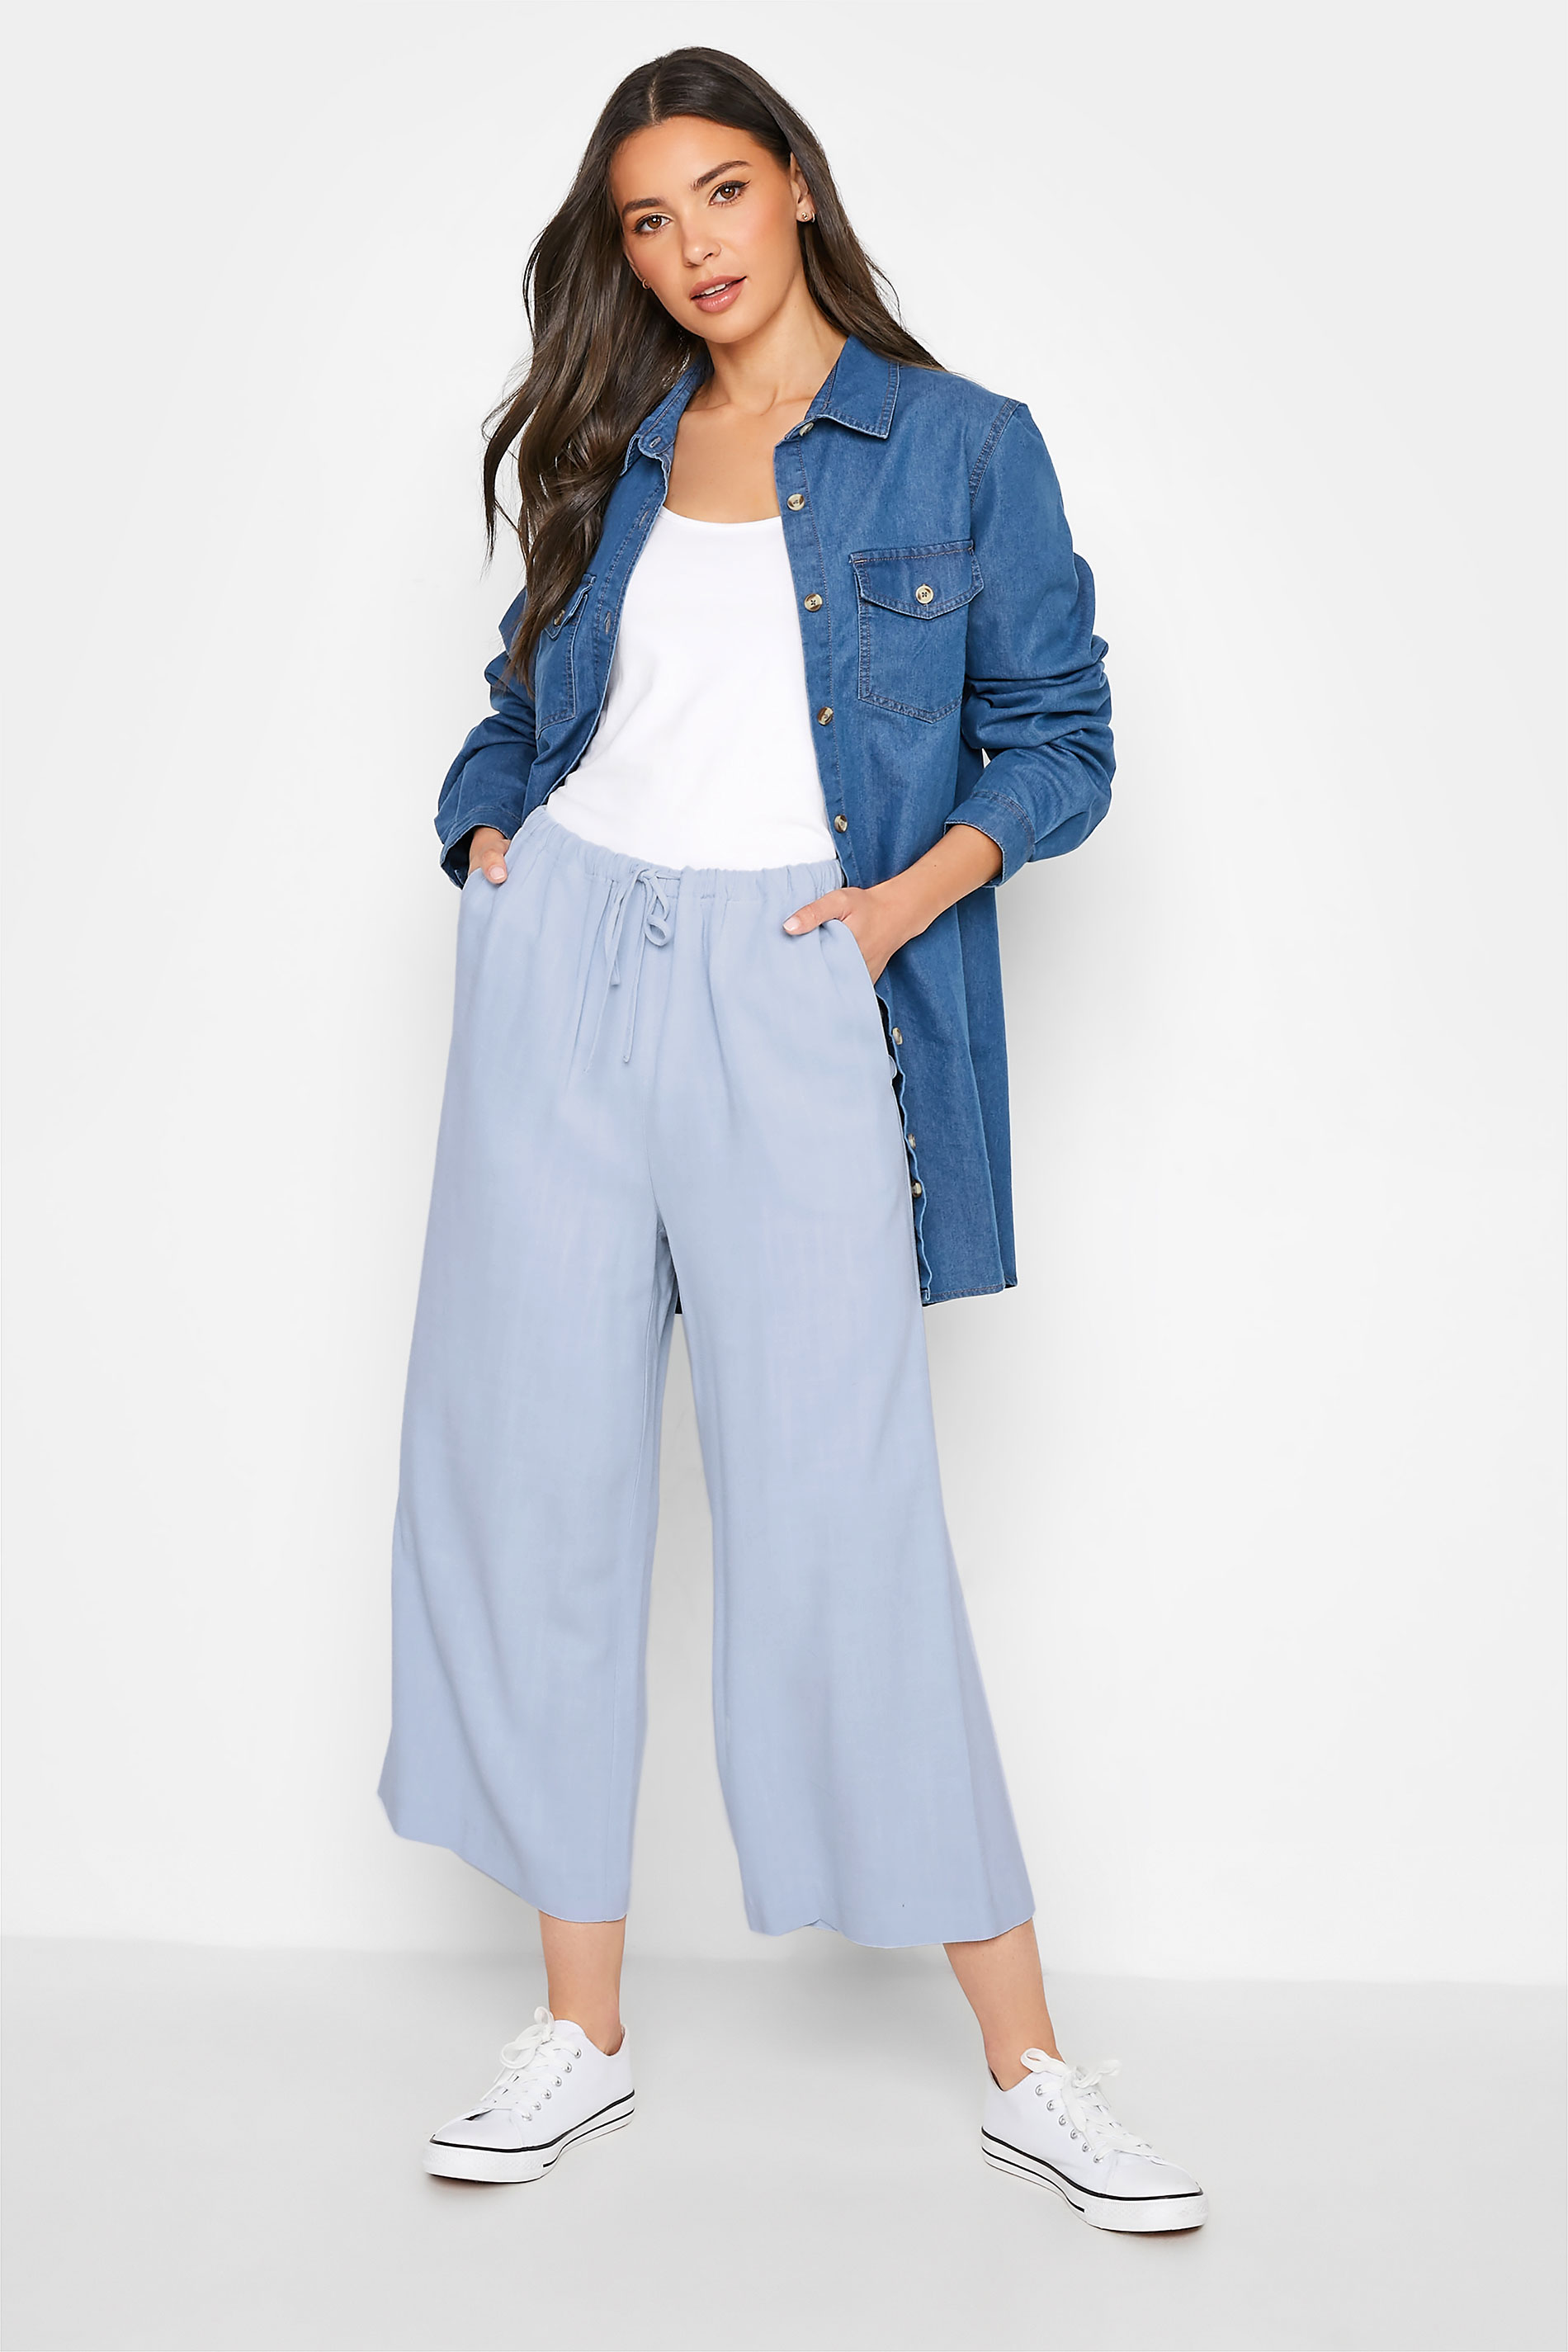 LTS Tall Women's Light Blue Linen Look Cropped Trousers | Long Tall Sally  2